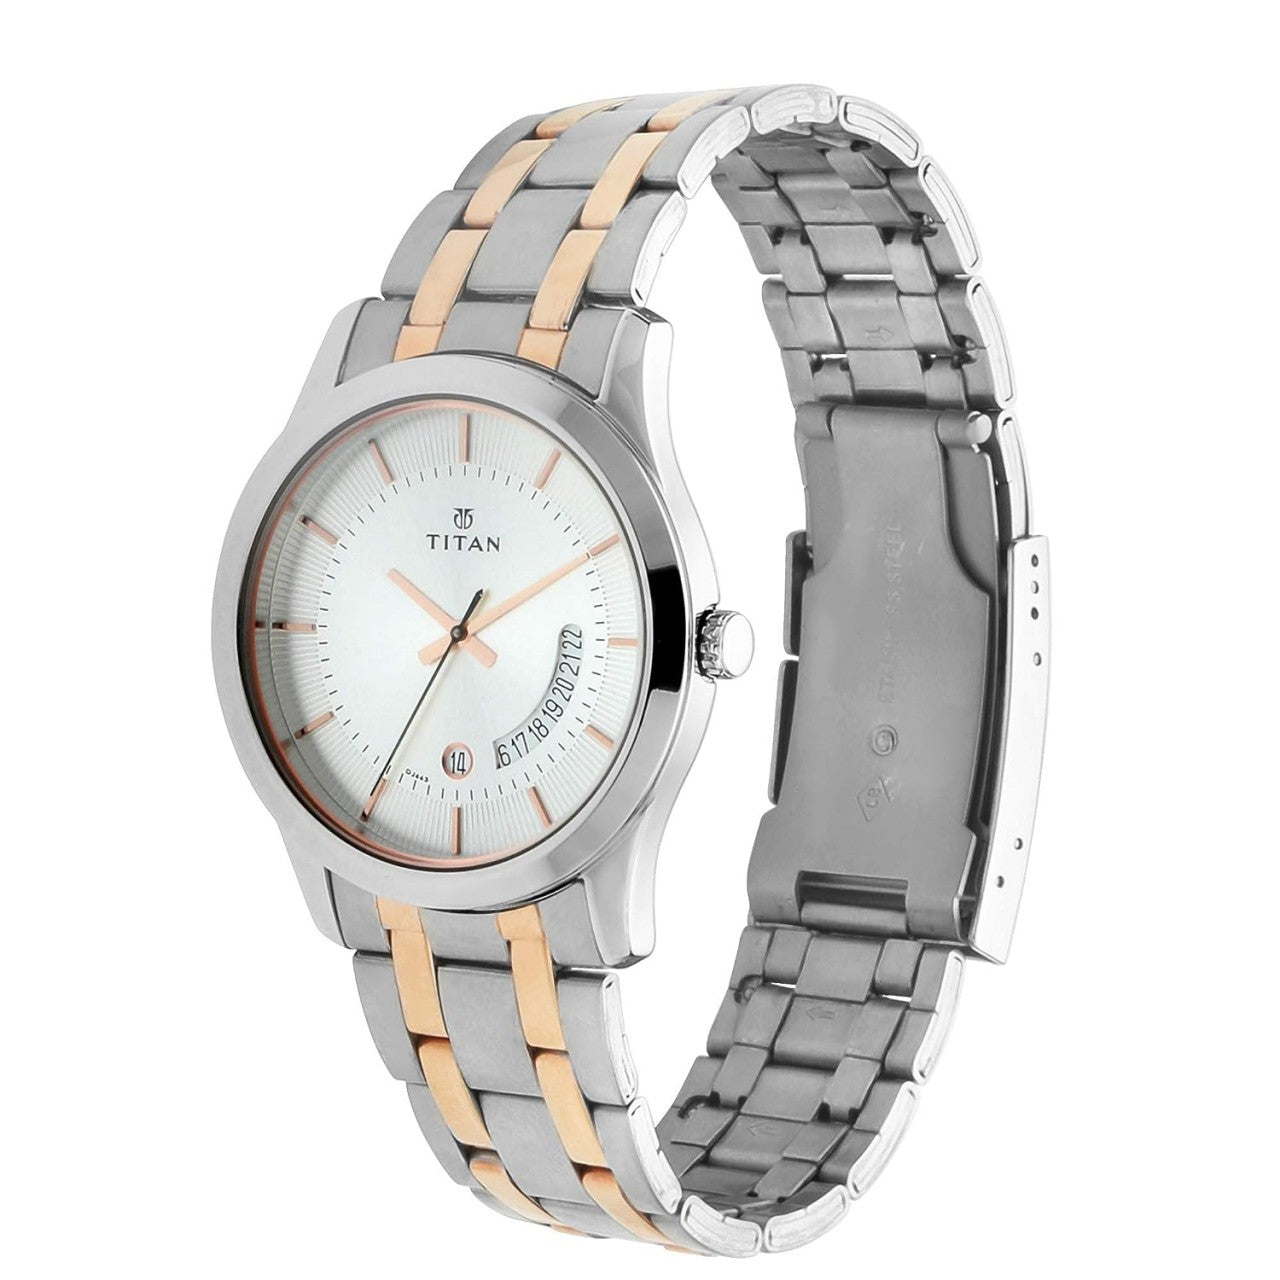 Buy Now Titan Analog for Men's Best Watch | Watches & Accessories | Best Watches | Halabh.com